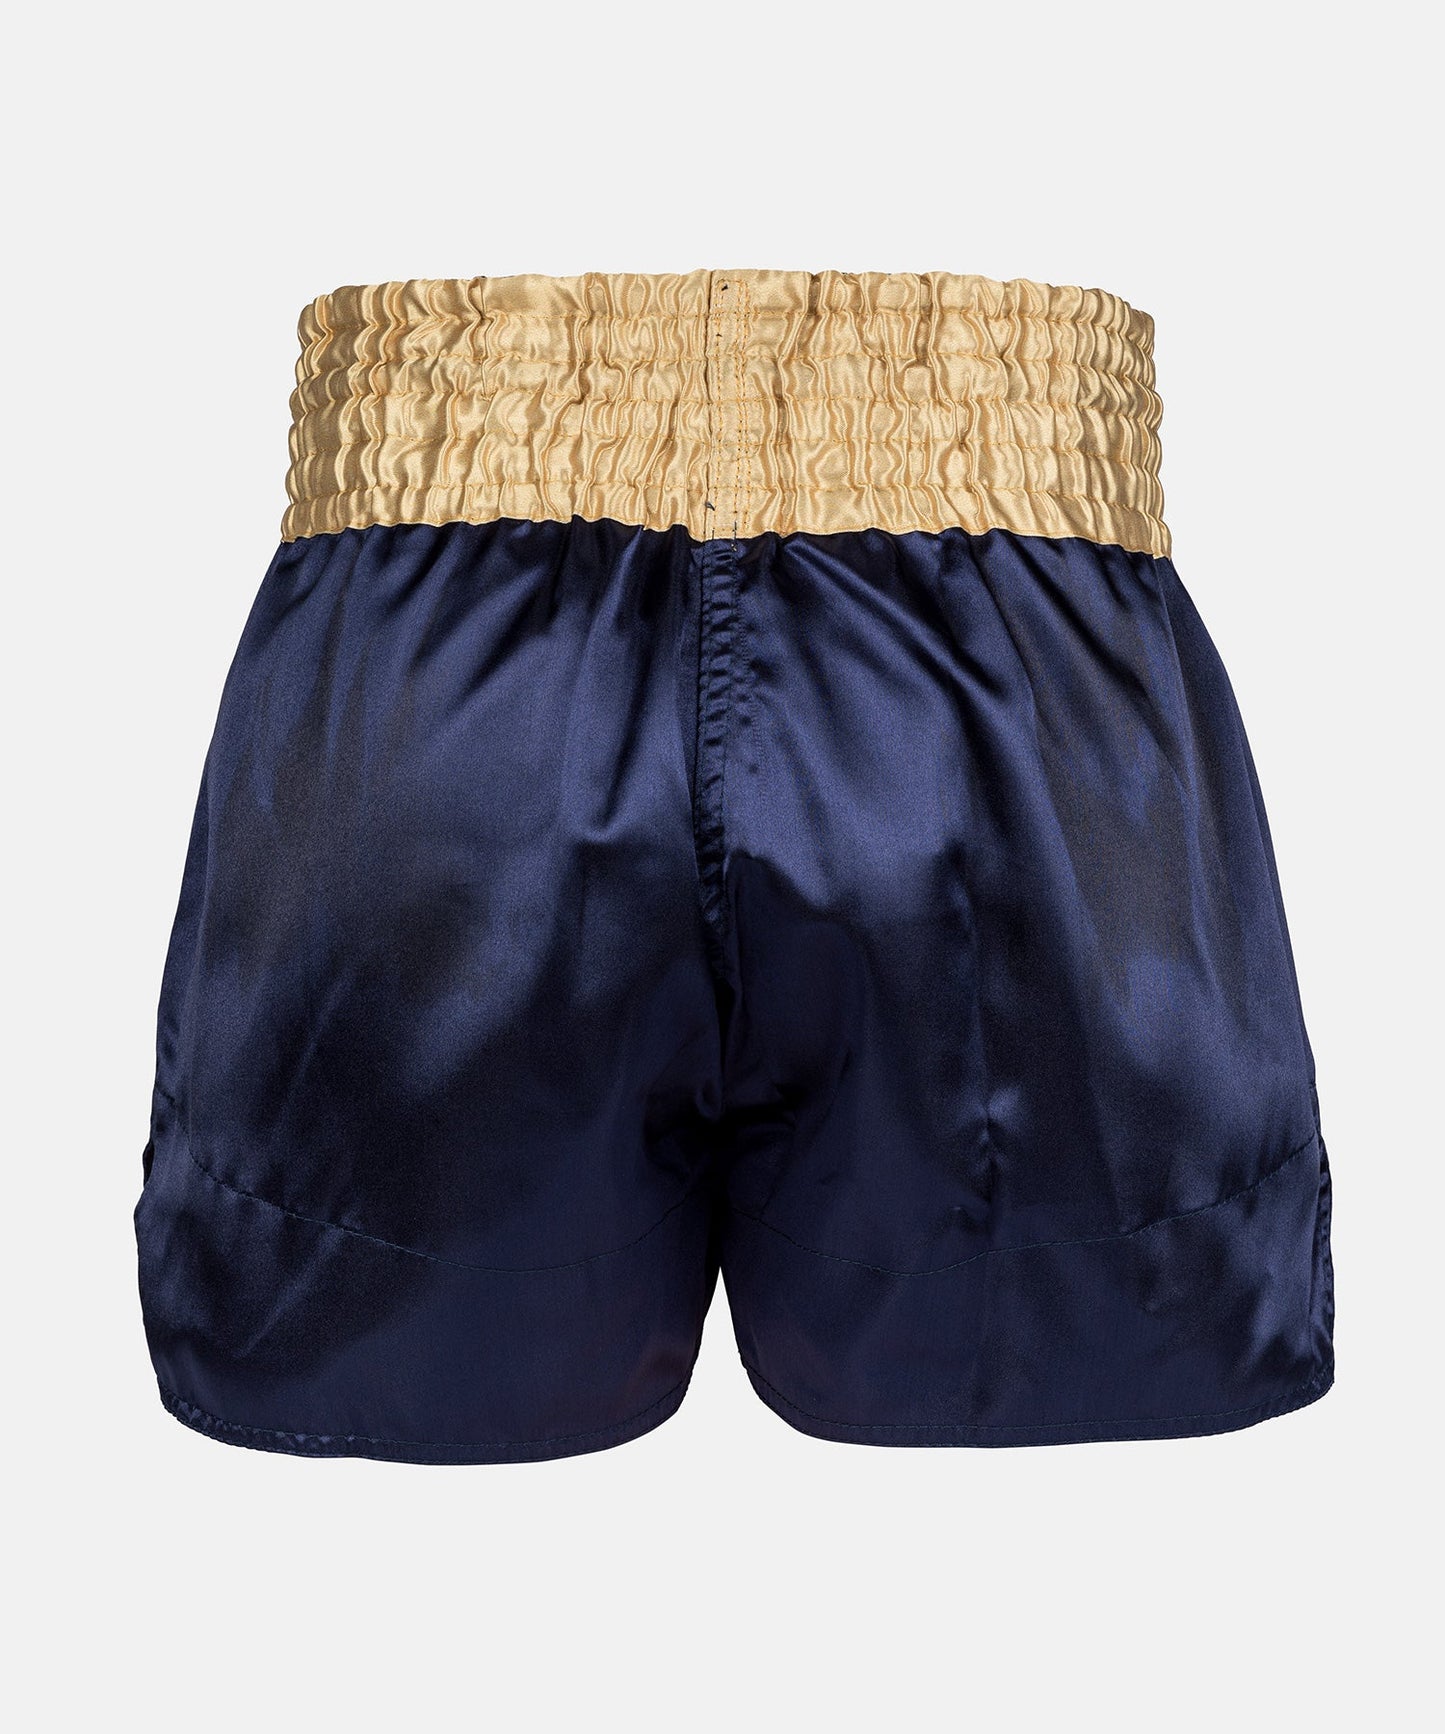 Venum Classic Muay Thai Shorts - Navy Blue/Gold